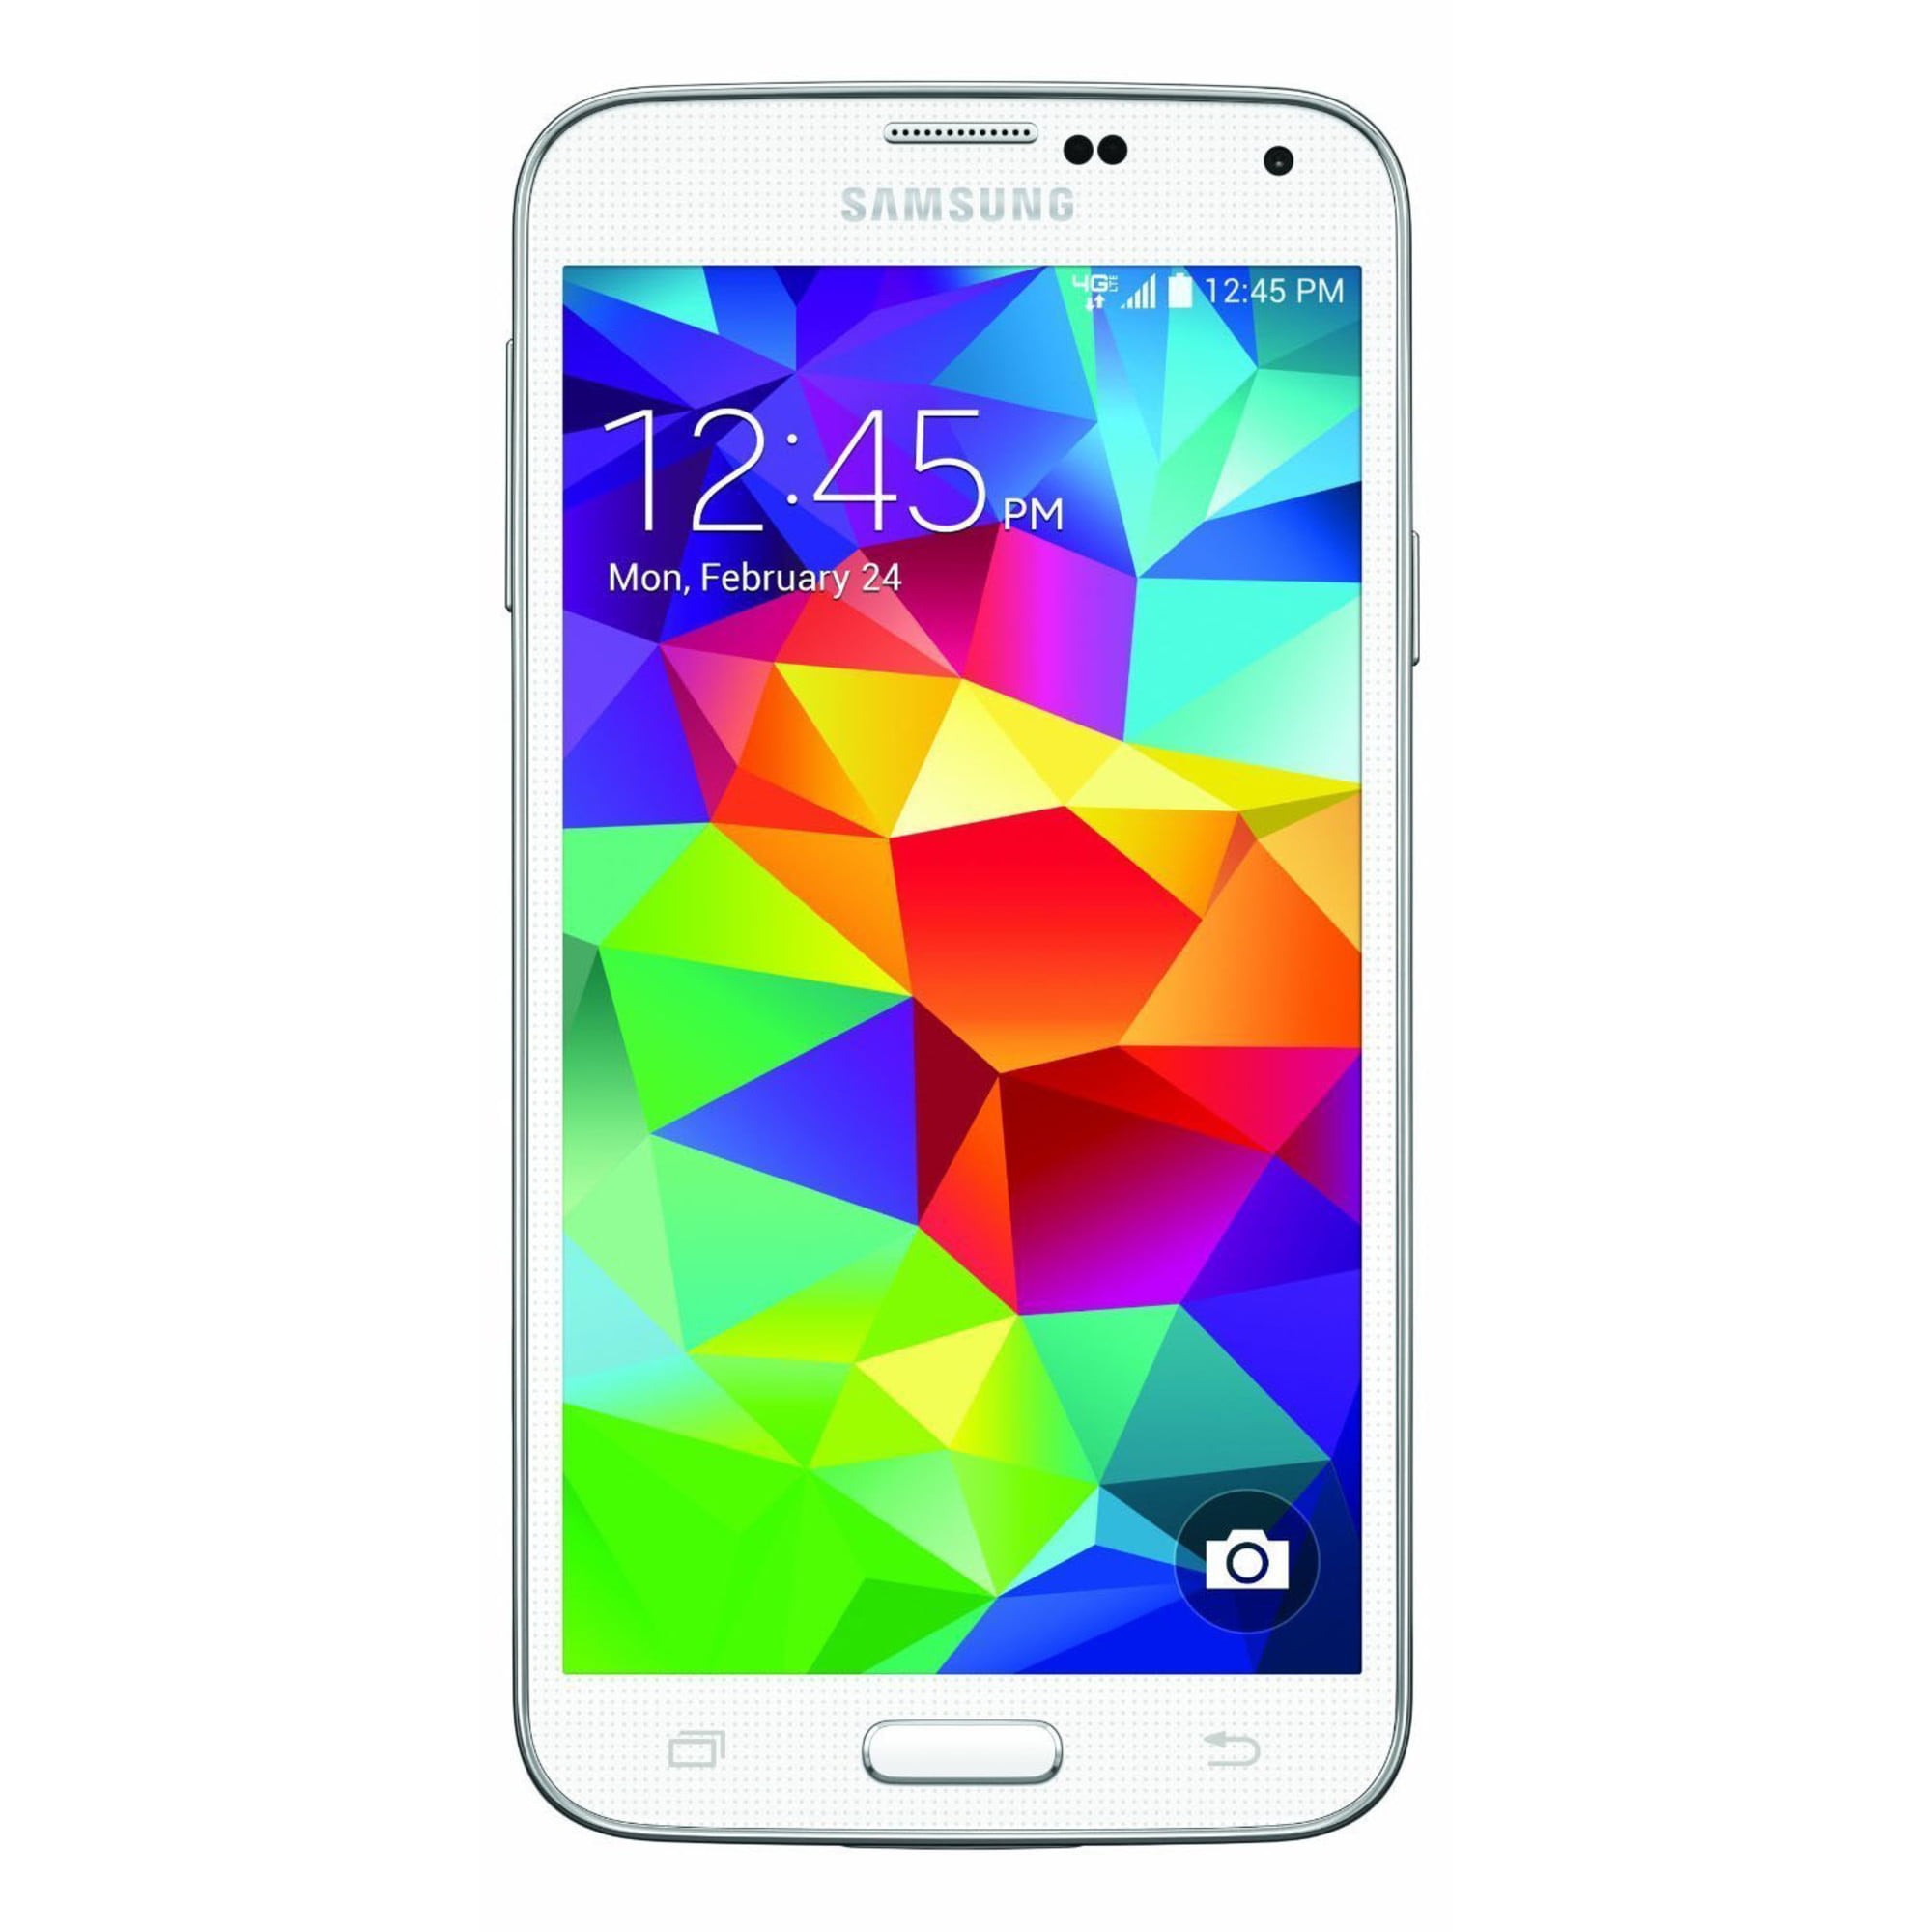 Samsung Galaxy S5 G900v 16gb Verizon Cdma Phone W 16mp Camera White